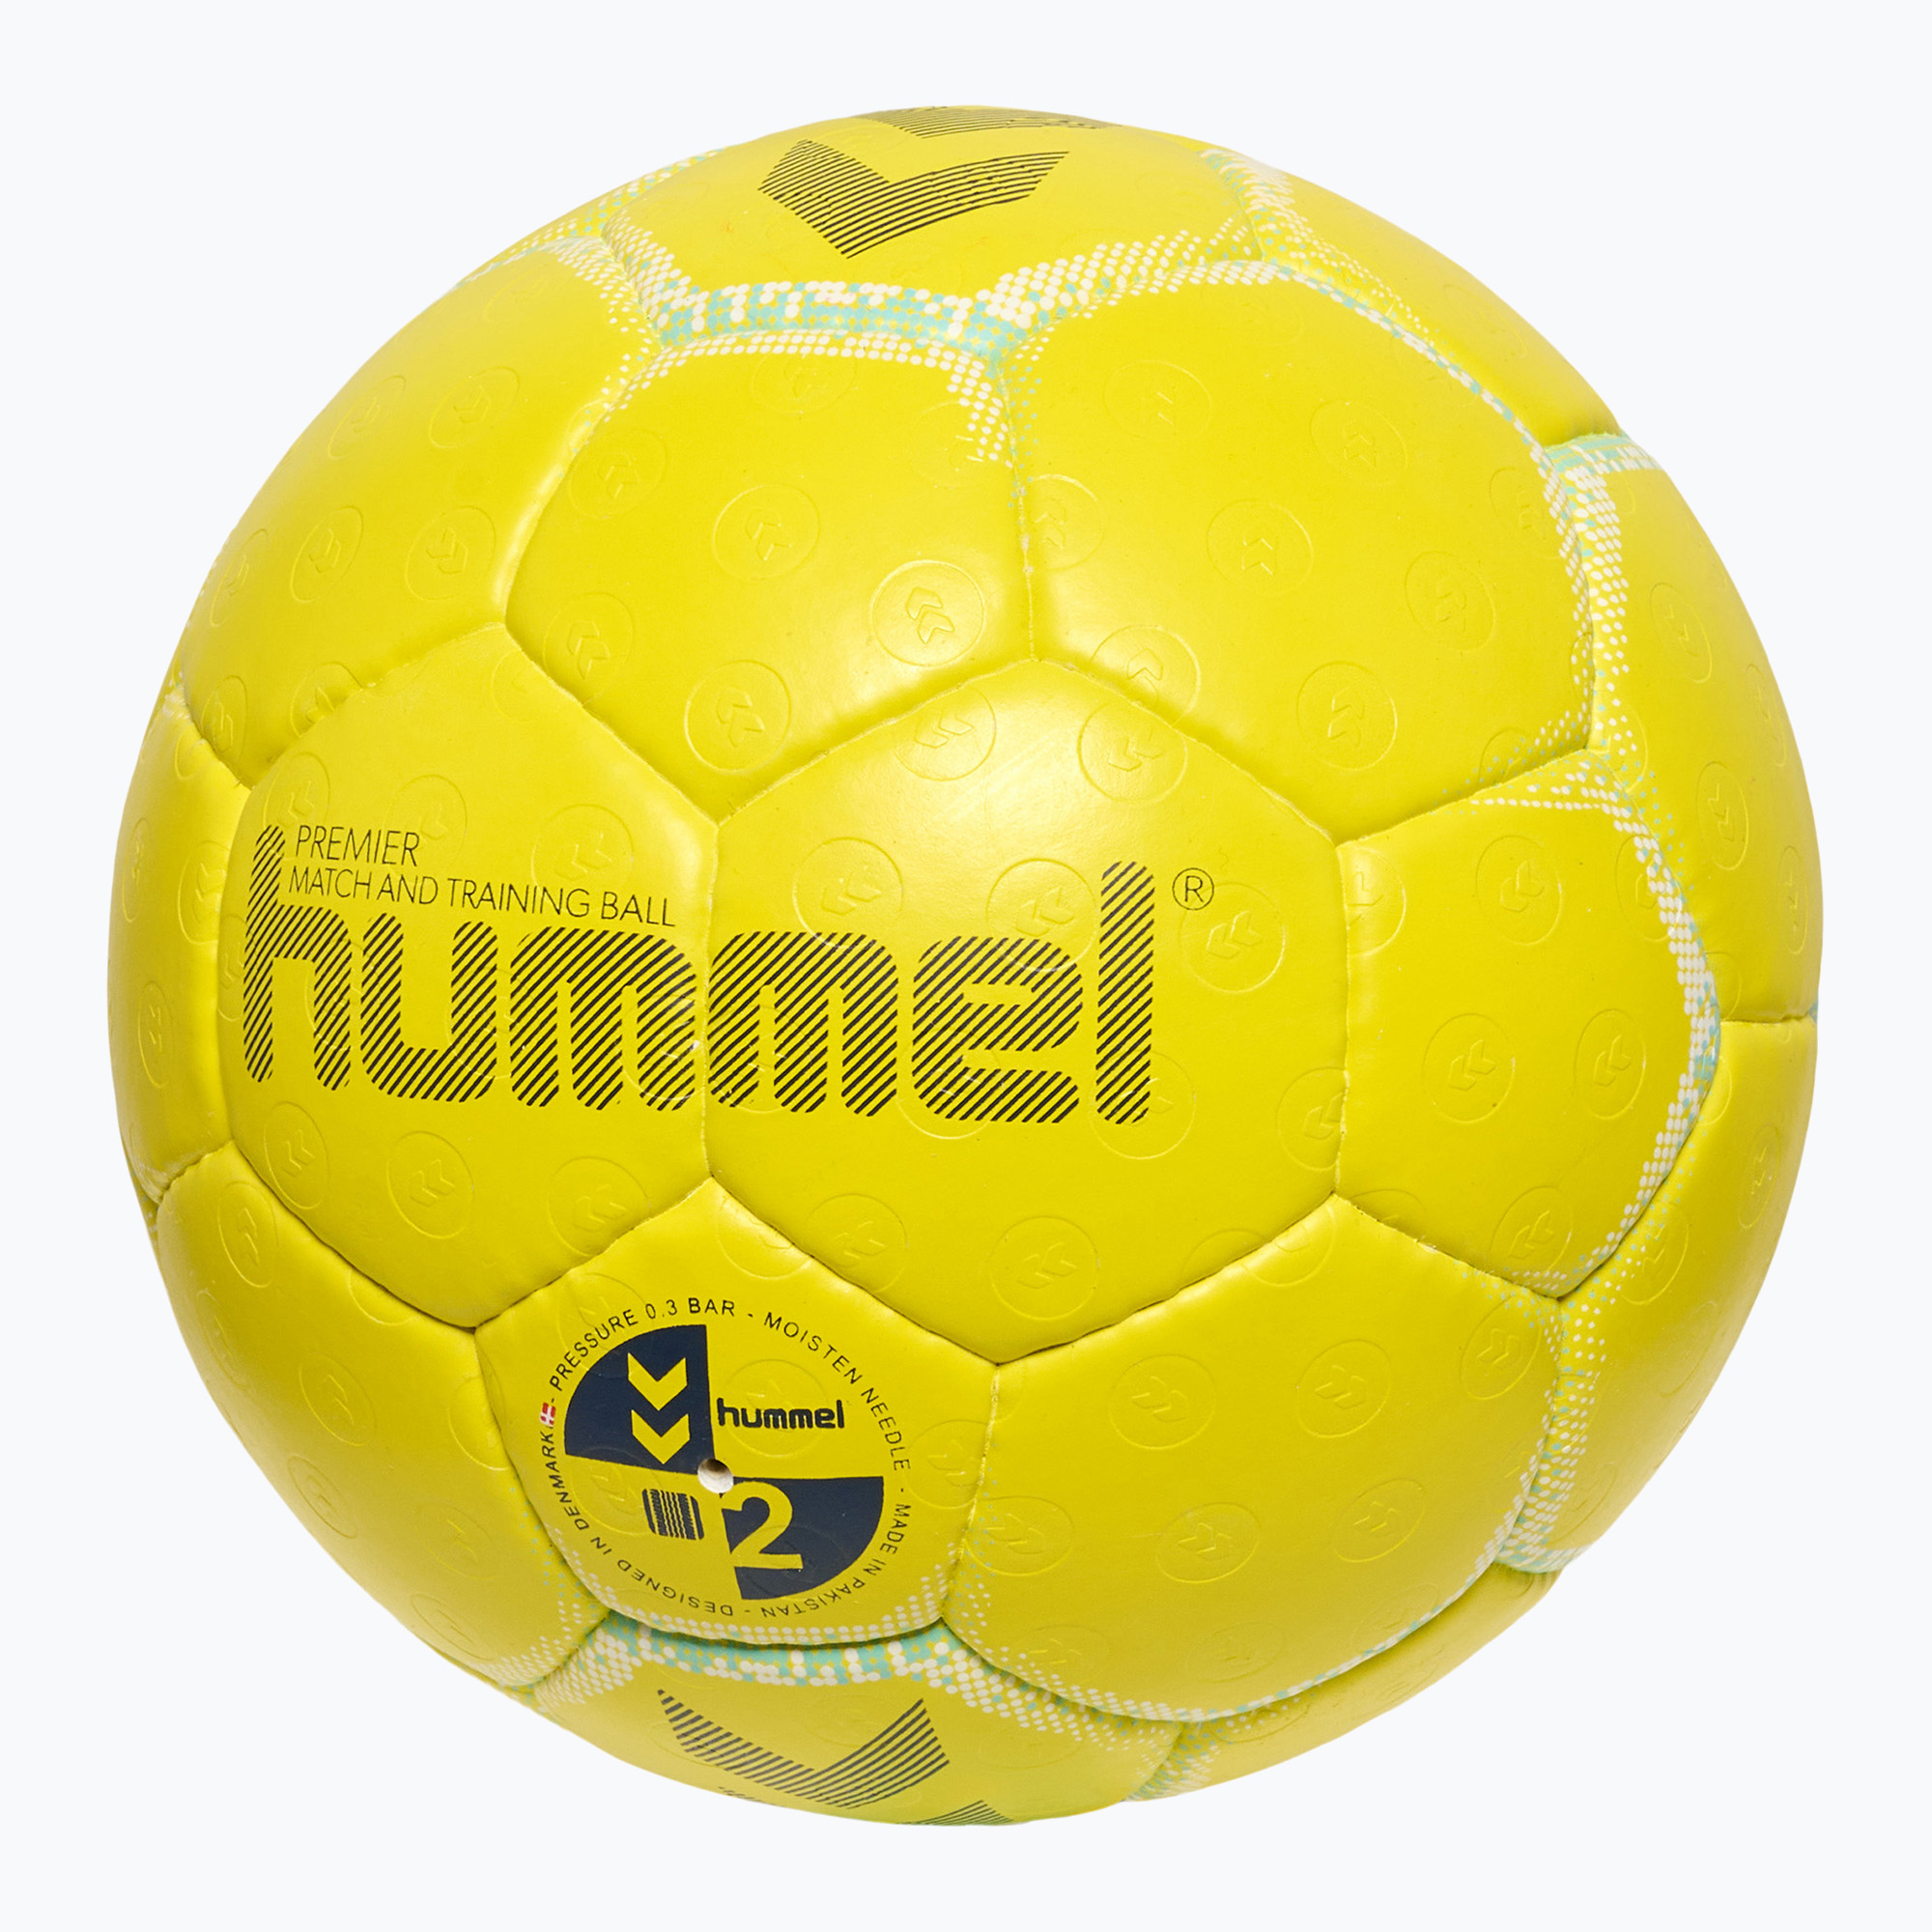 Hummel Premier HB handball yellow/white/blue size 3